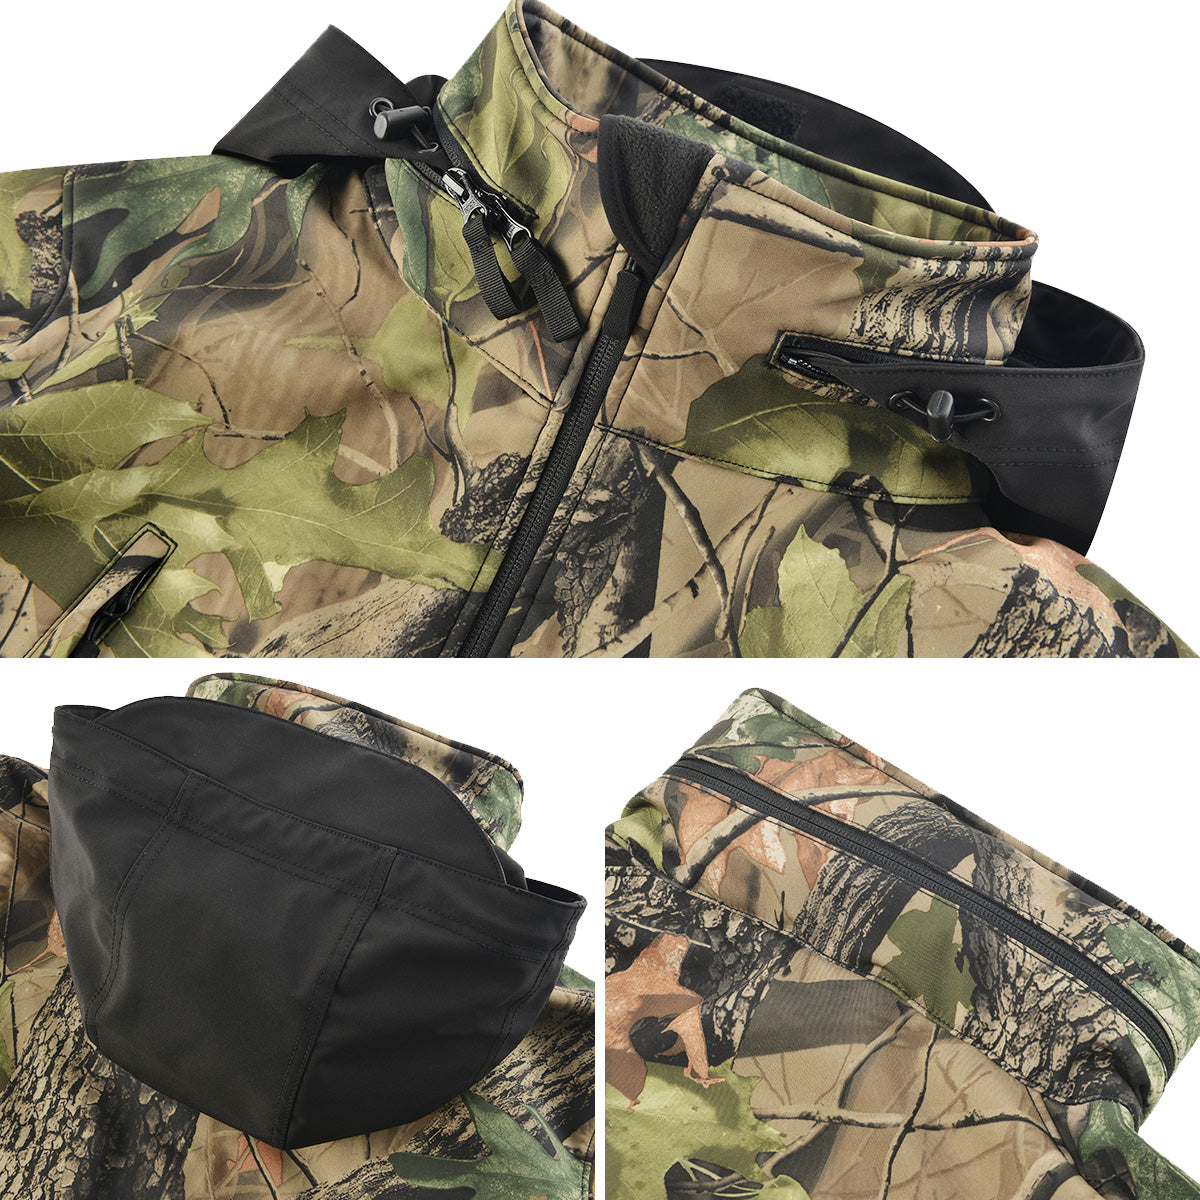 HARDLAND Men's Tactical Outdoor Soft Shell Jacket